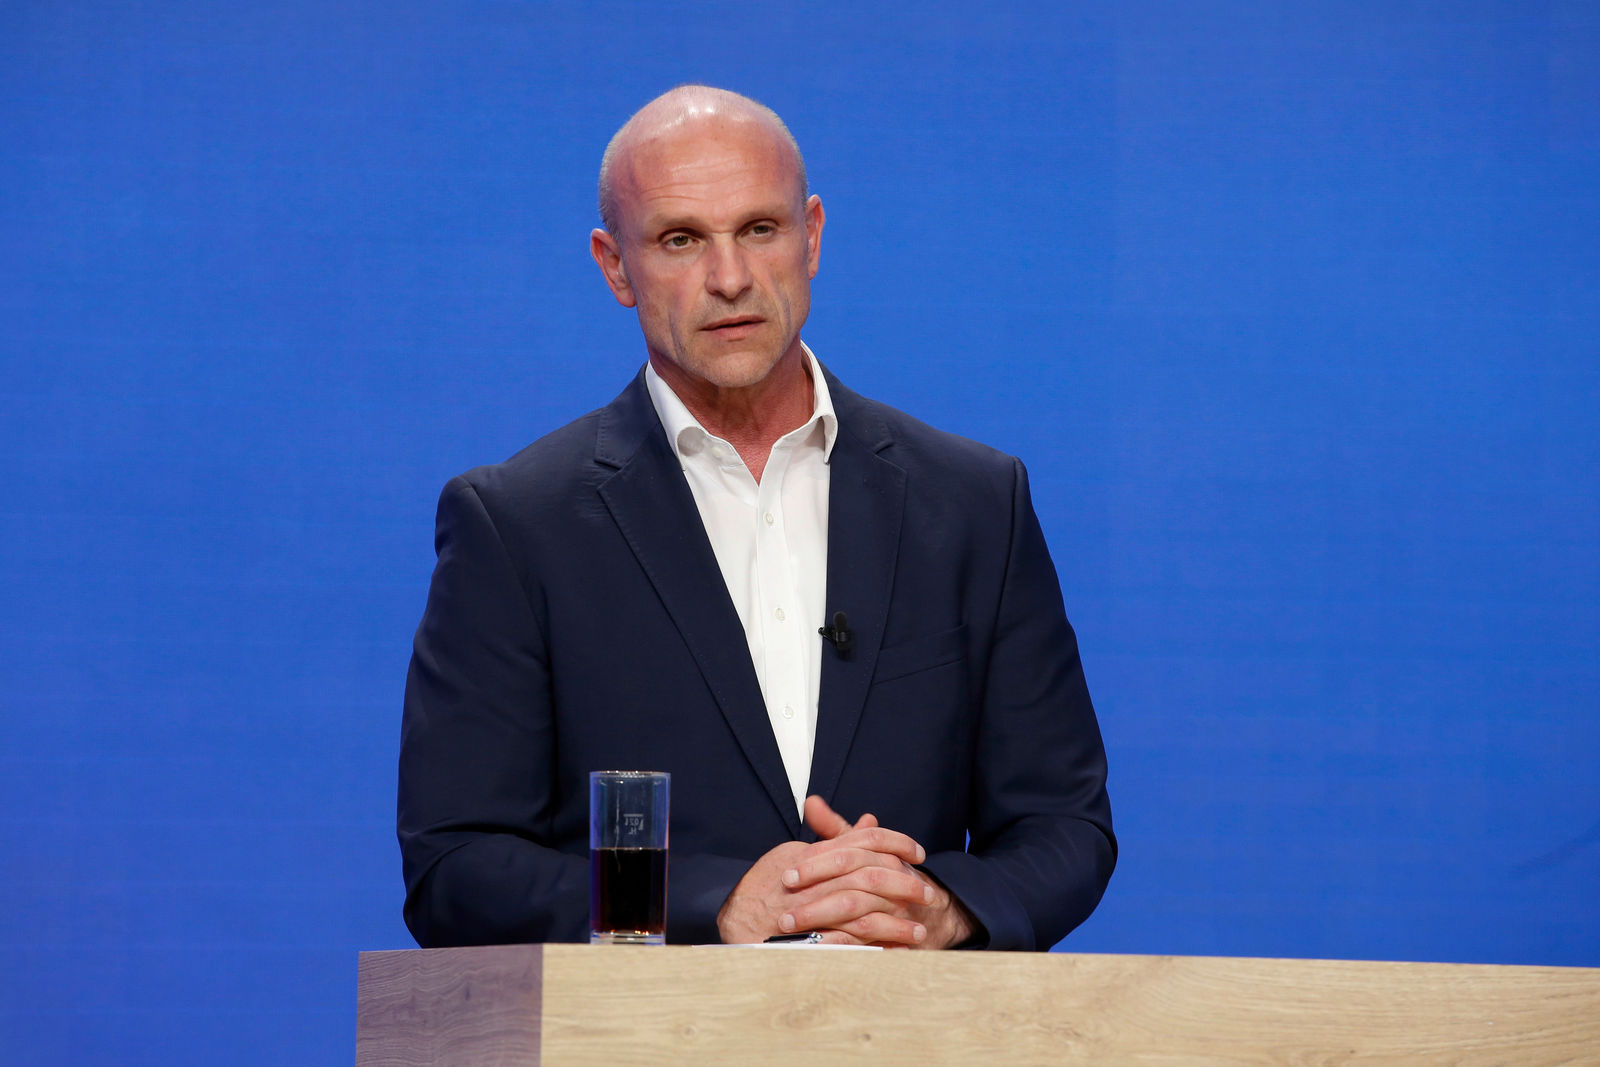 Volkswagen Brand annual media conference 2022